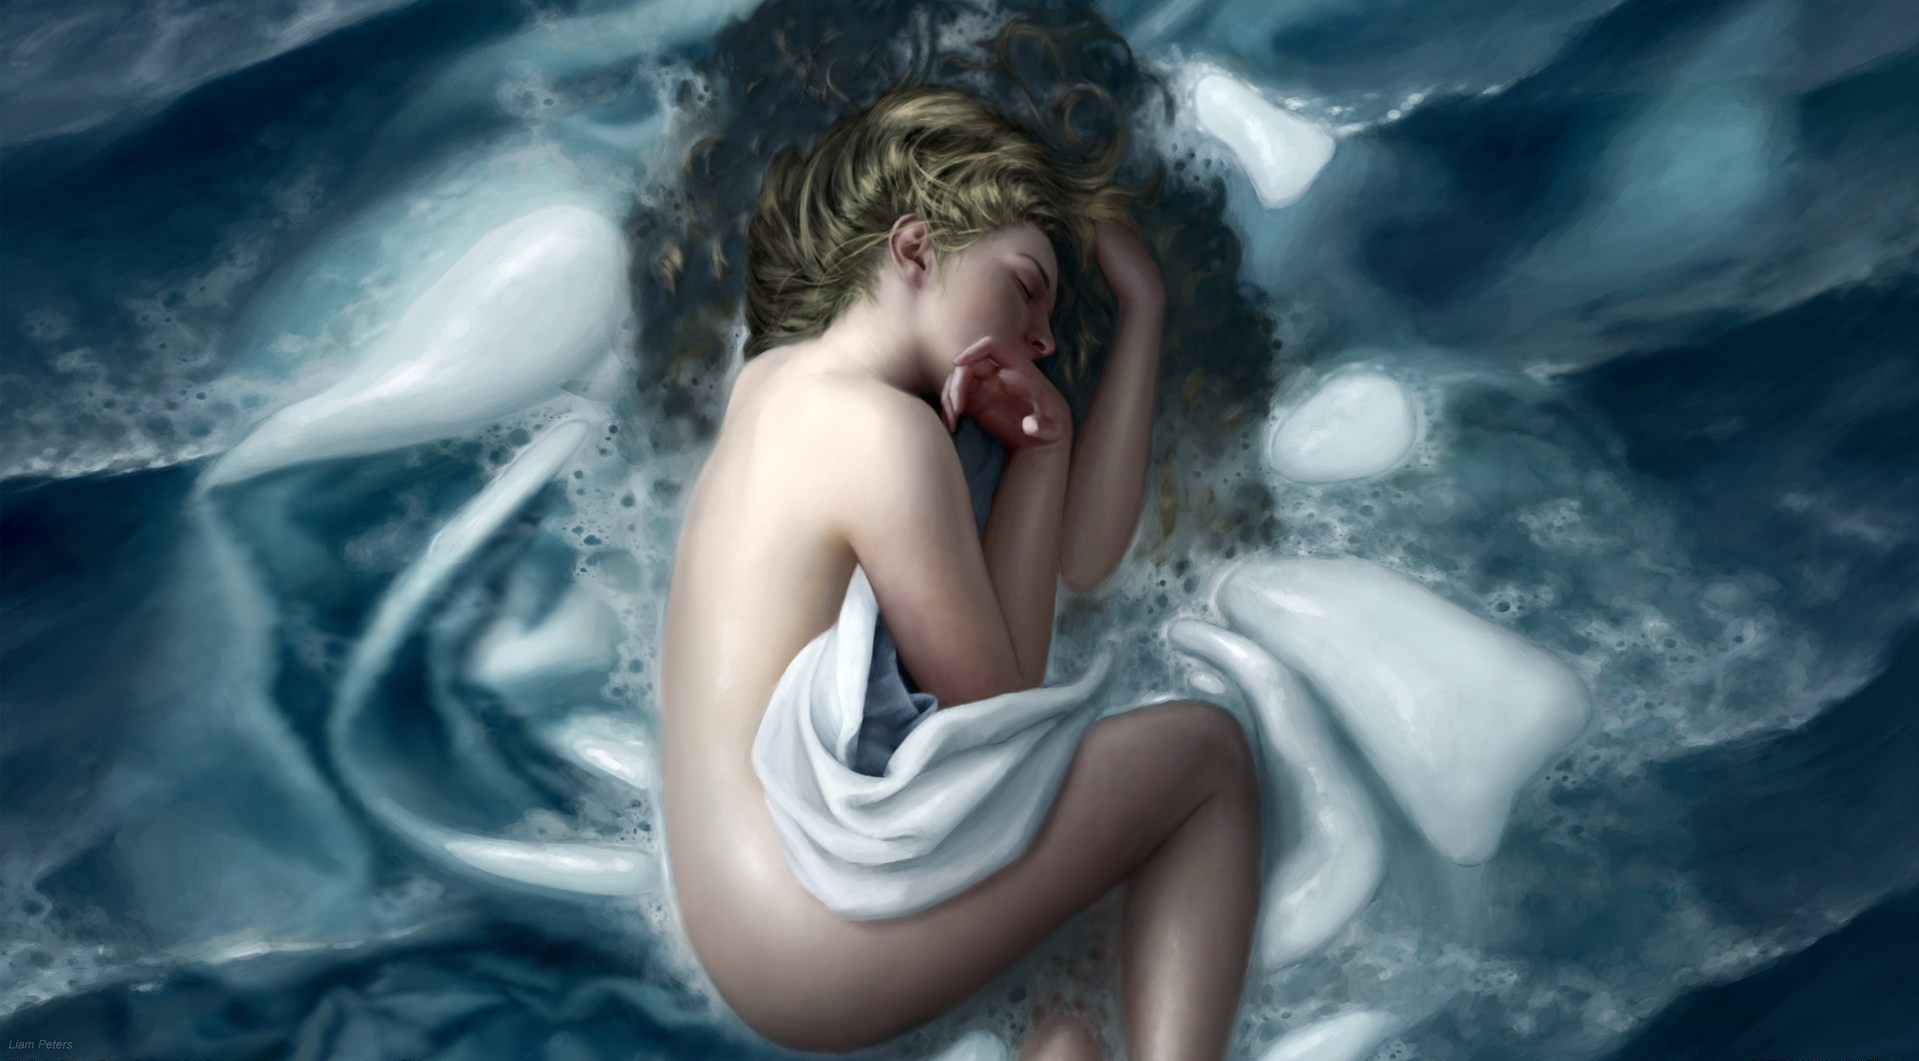 General 1919x1061 artwork women blonde fantasy art fantasy girl sleeping lying down fetal position